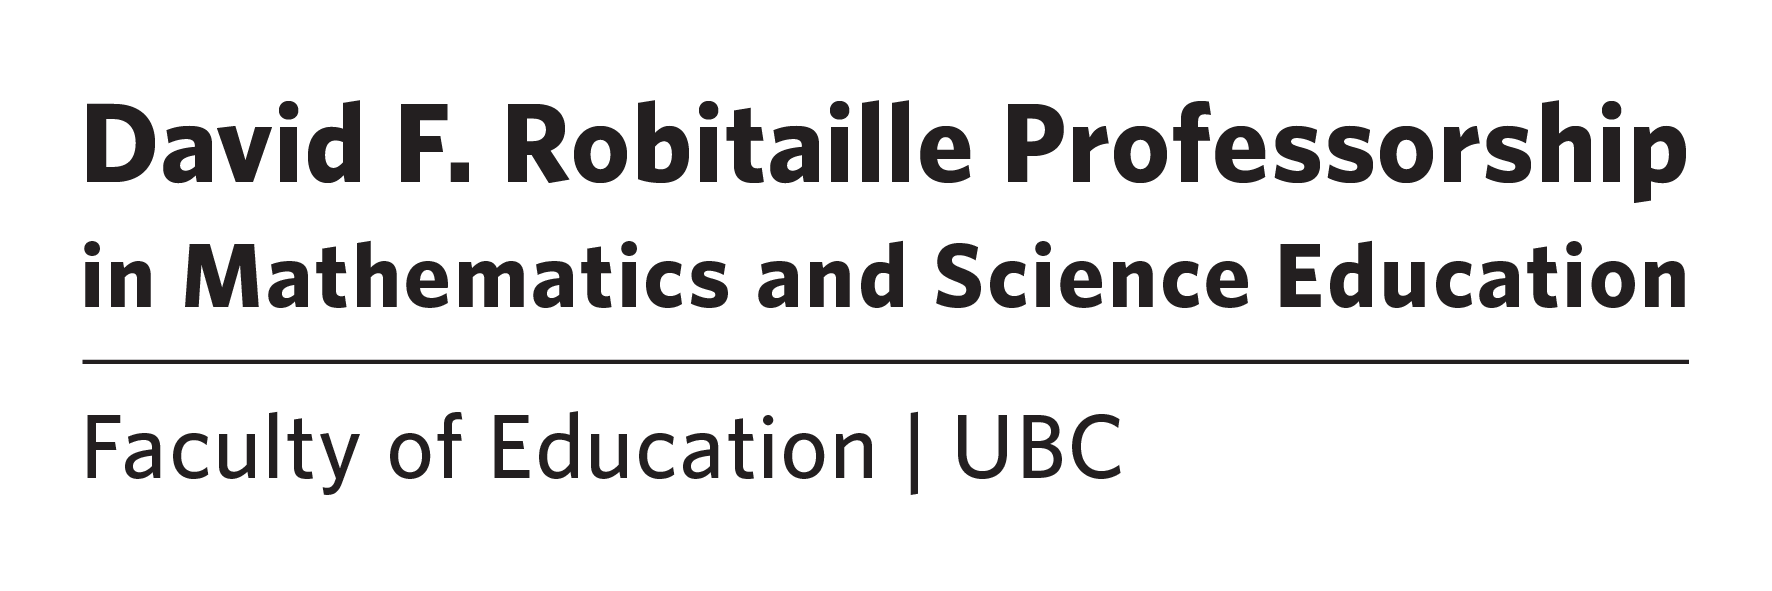 DFR Professorship Logo